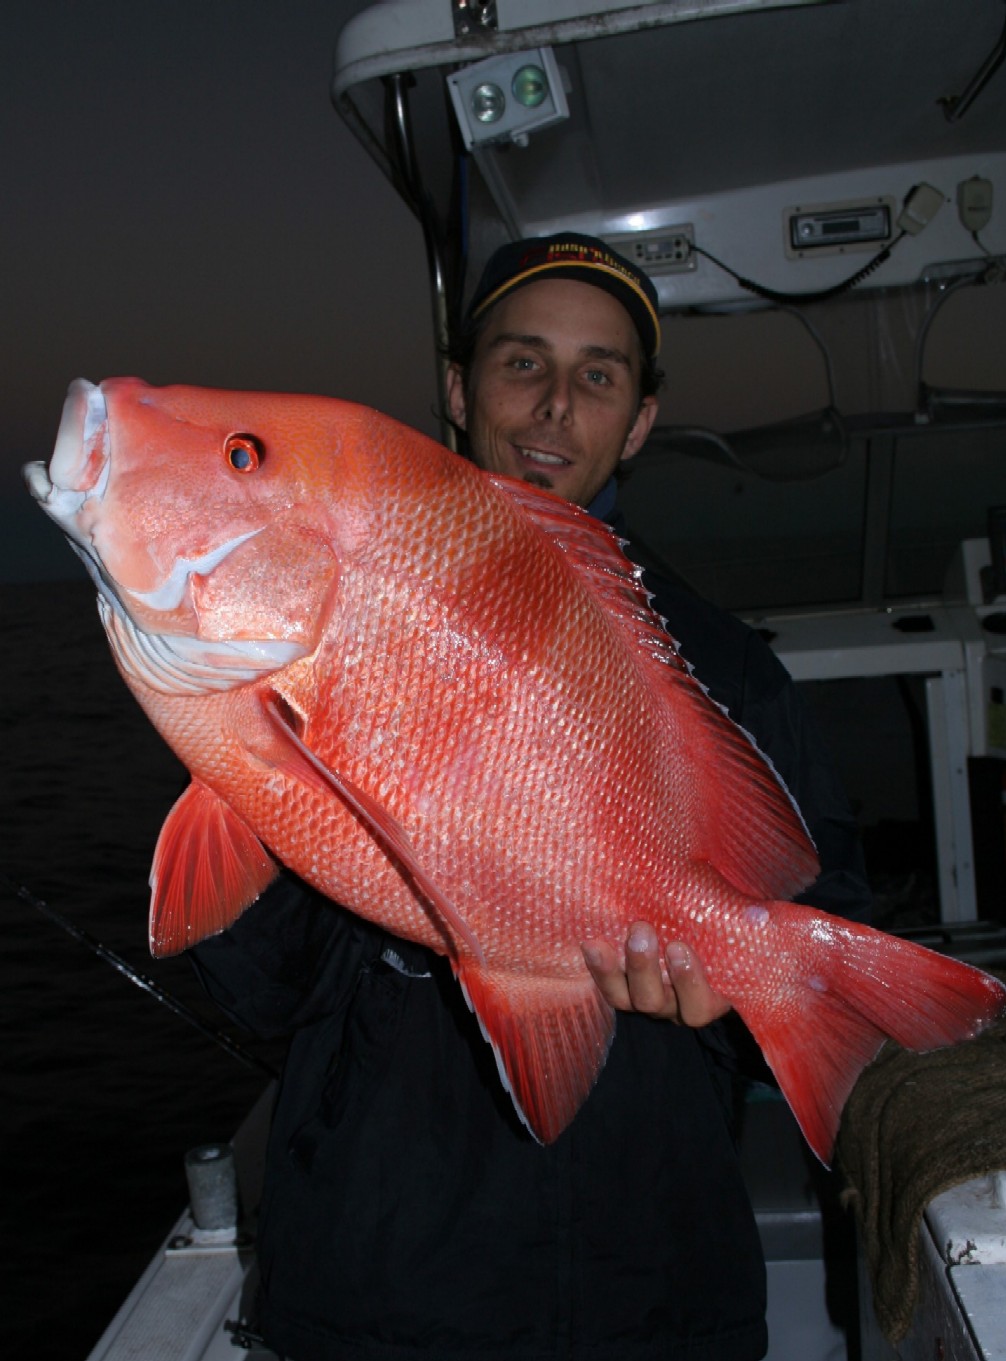 https://wickedfishing.com.au/wp-content/uploads/2011/10/Pic3red2.jpg